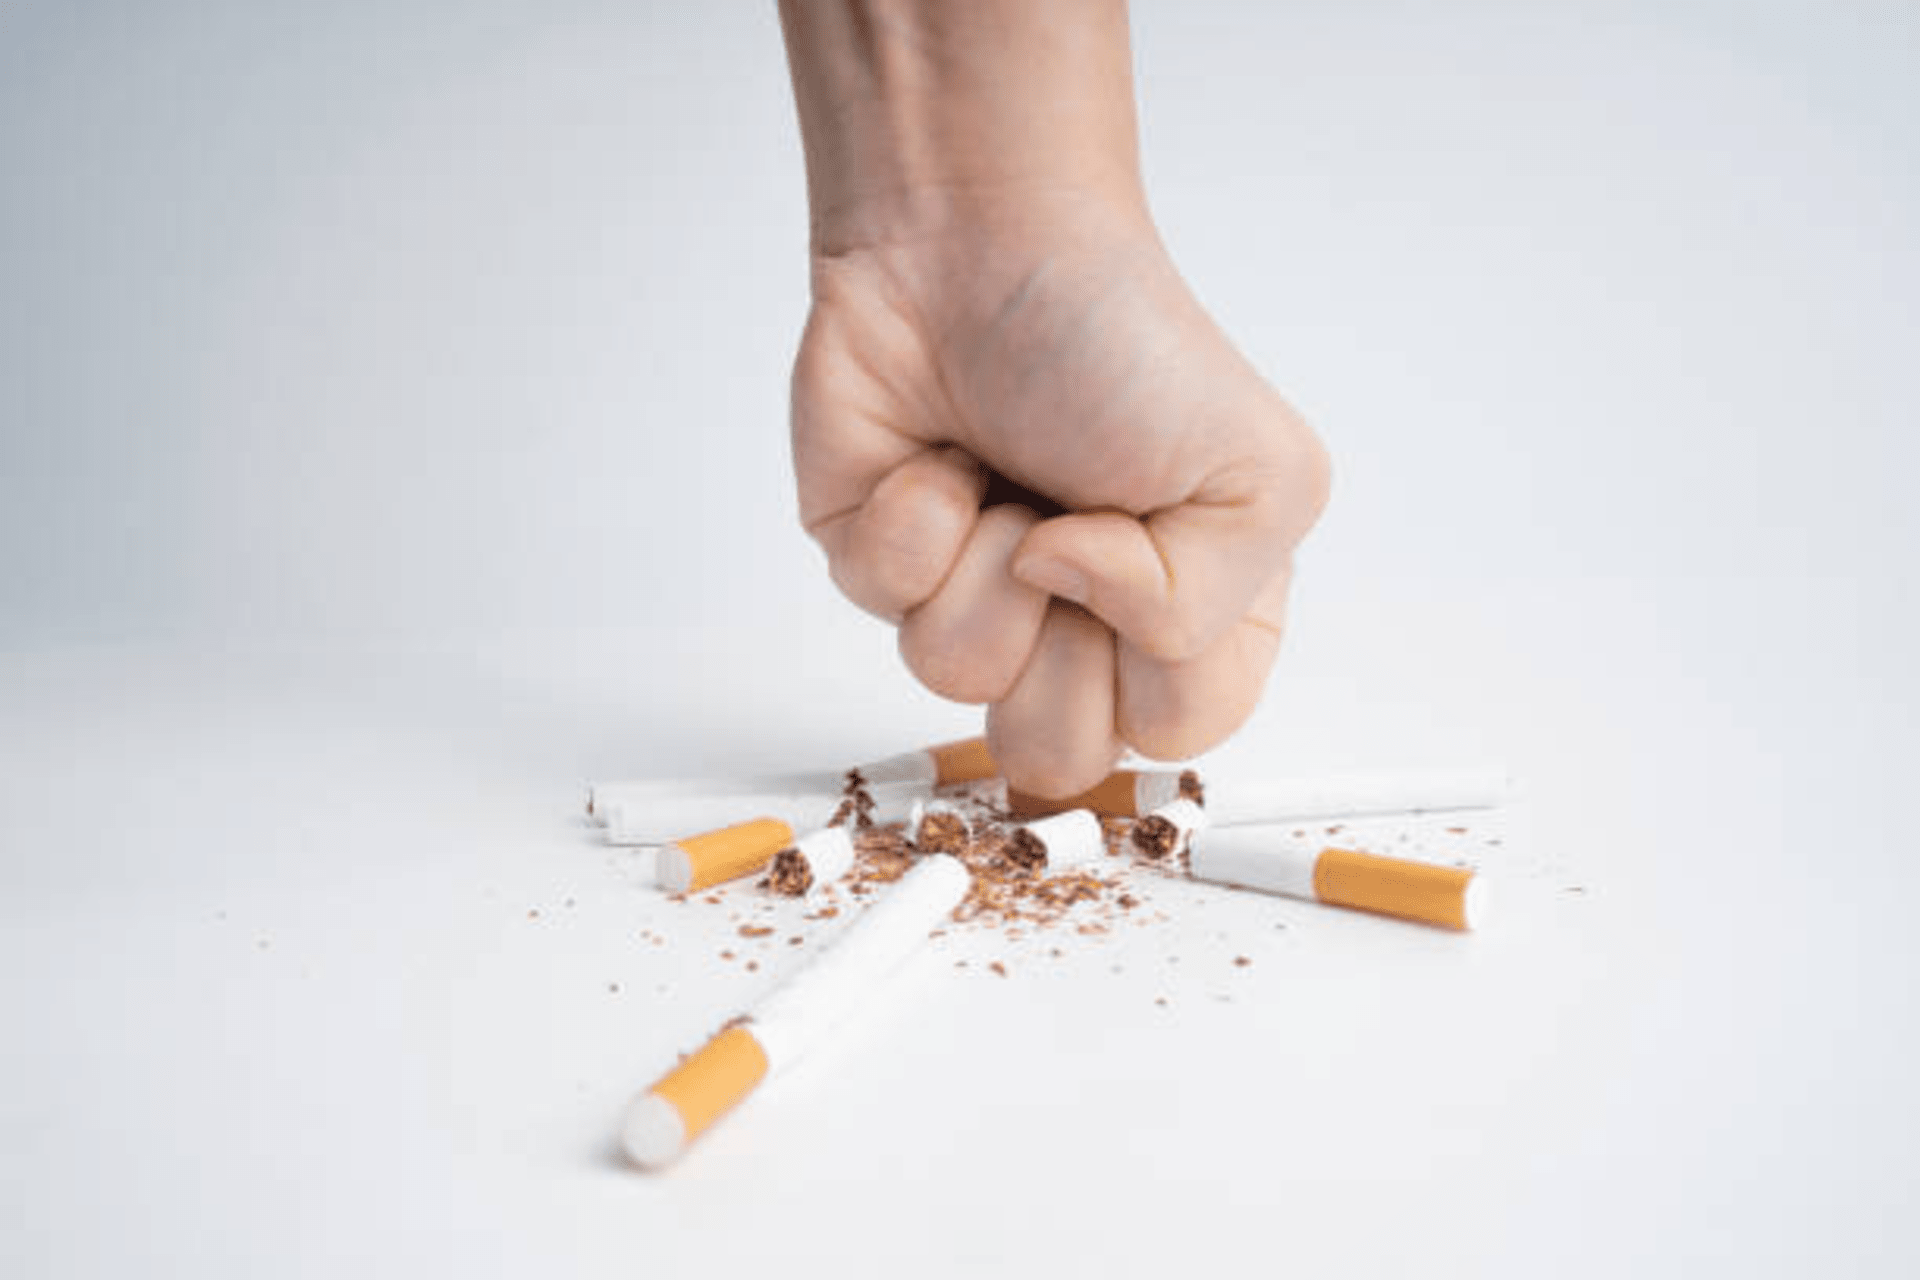 Inilah 6 tips berhenti merokok yang mudah dilakukan namun harus penuh kesabaran dan konsisten, salah satunya dengan mengunyah sesuatu